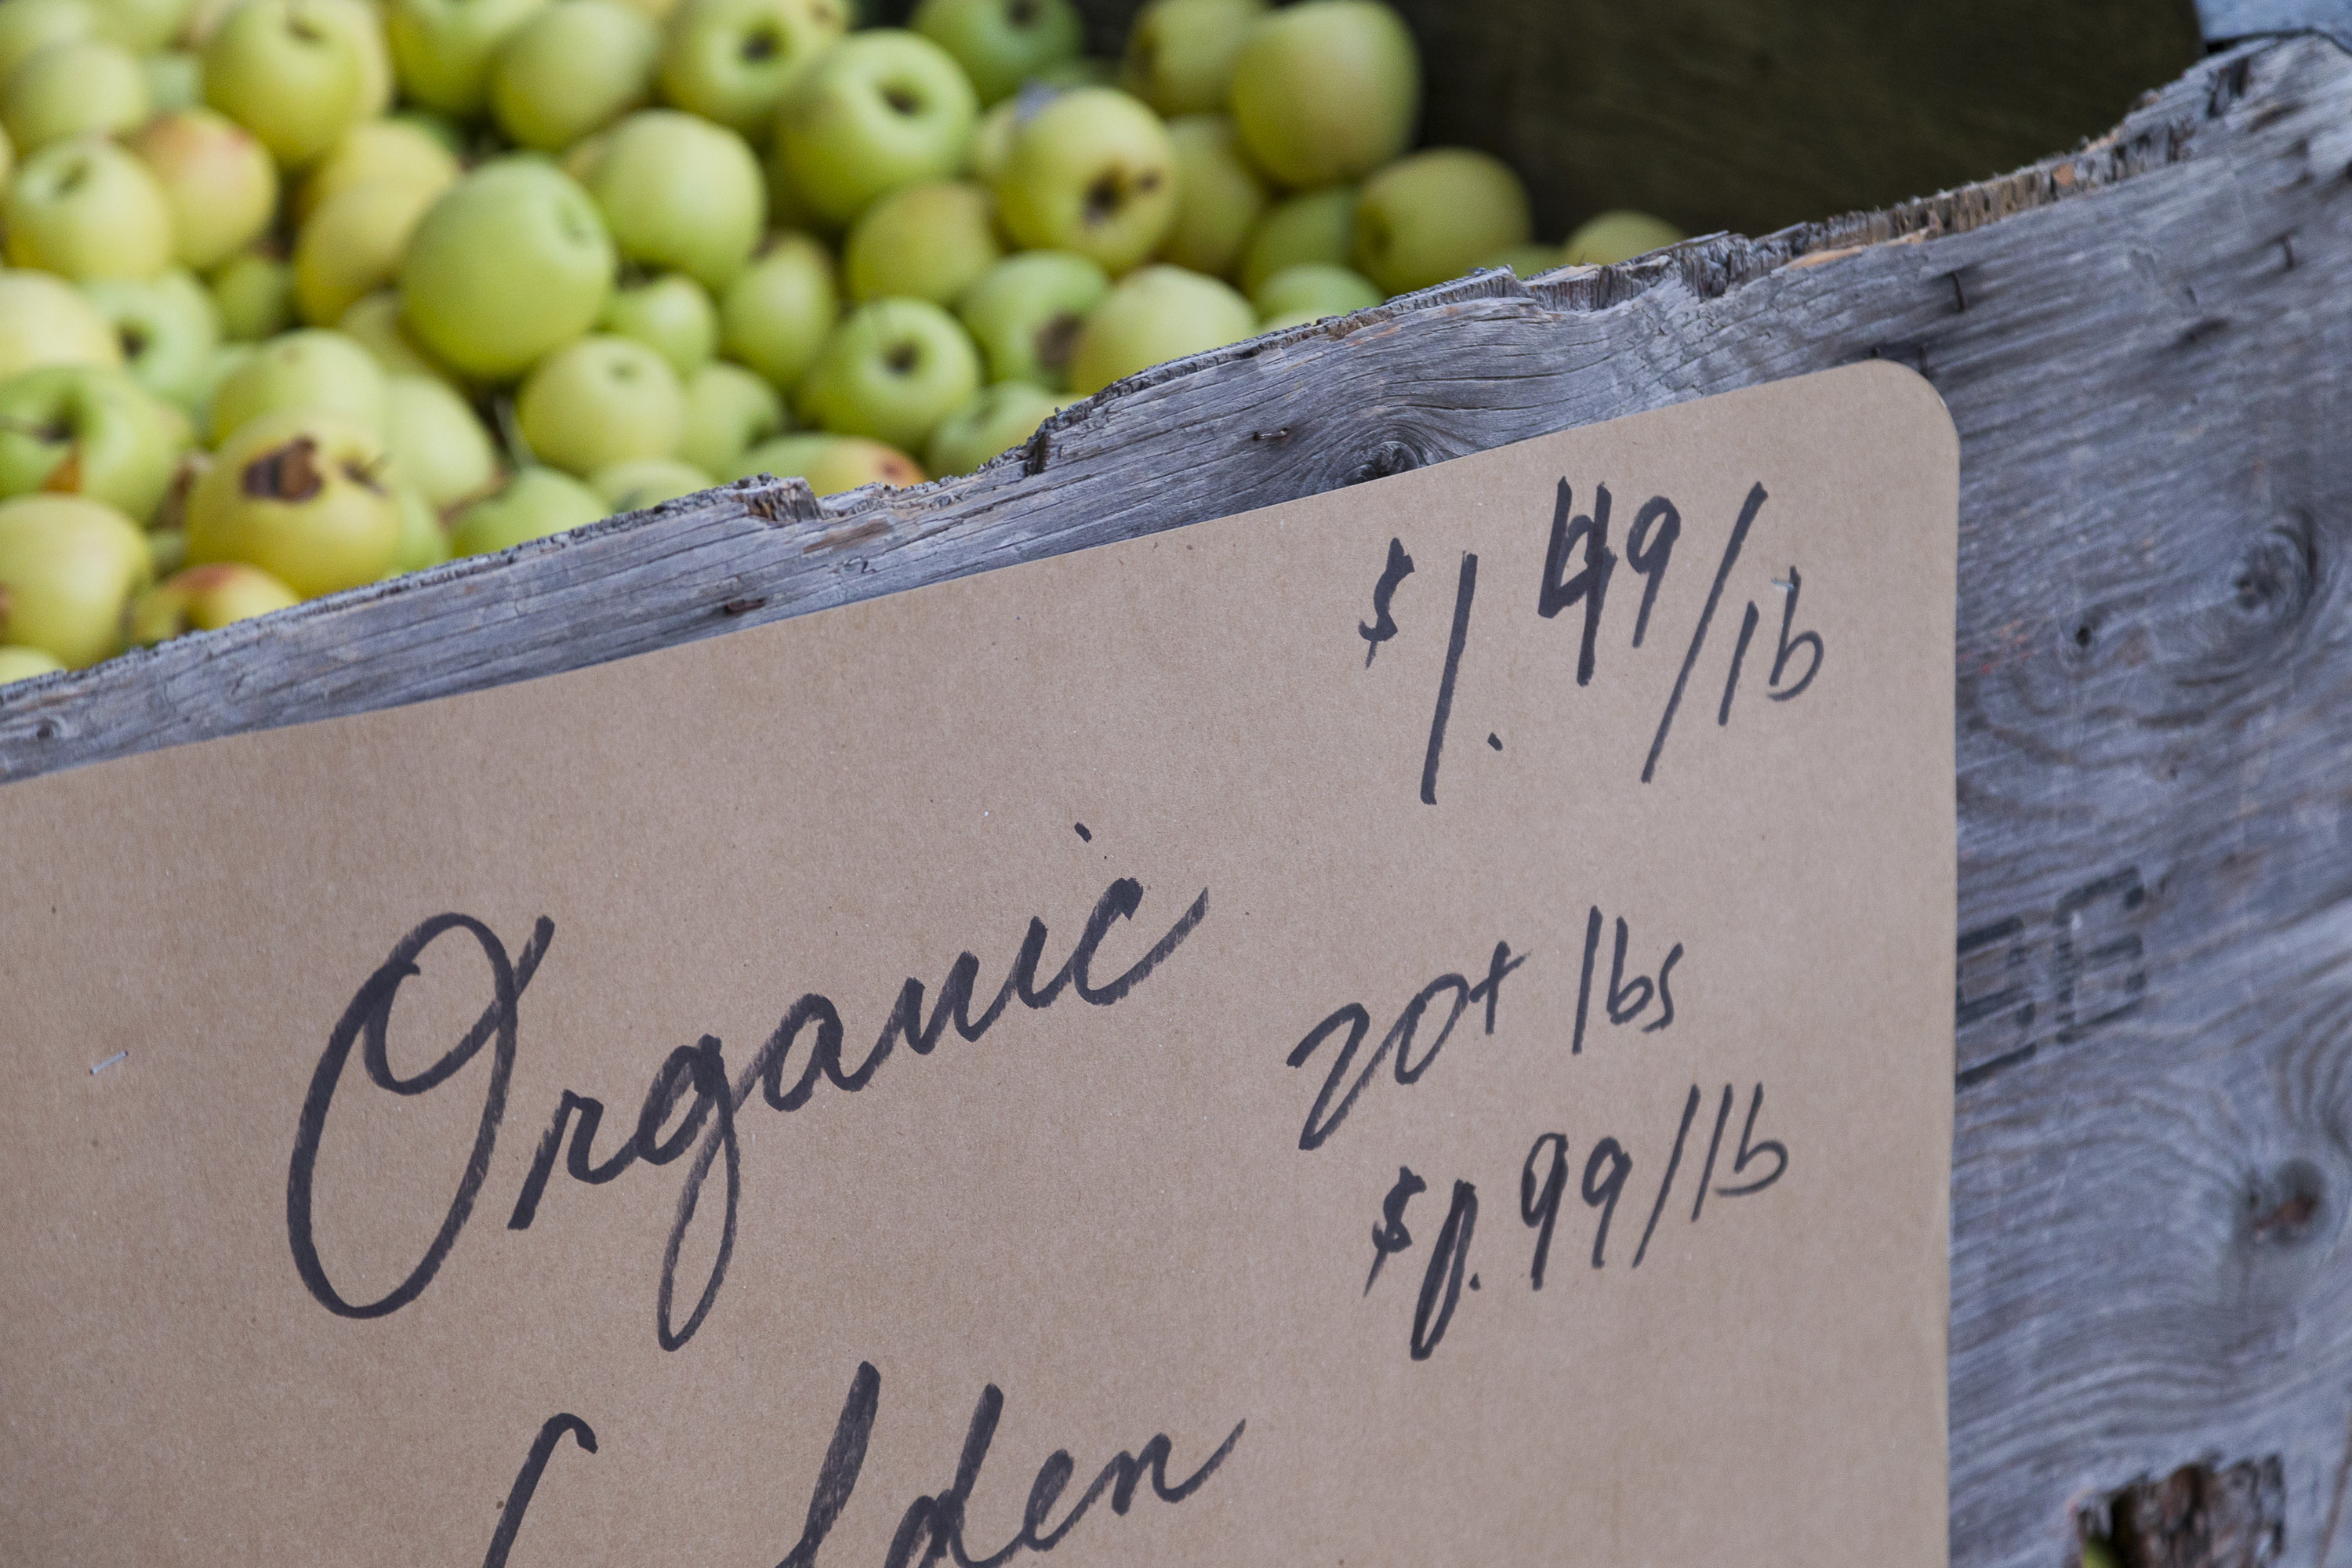 Box of organic apples